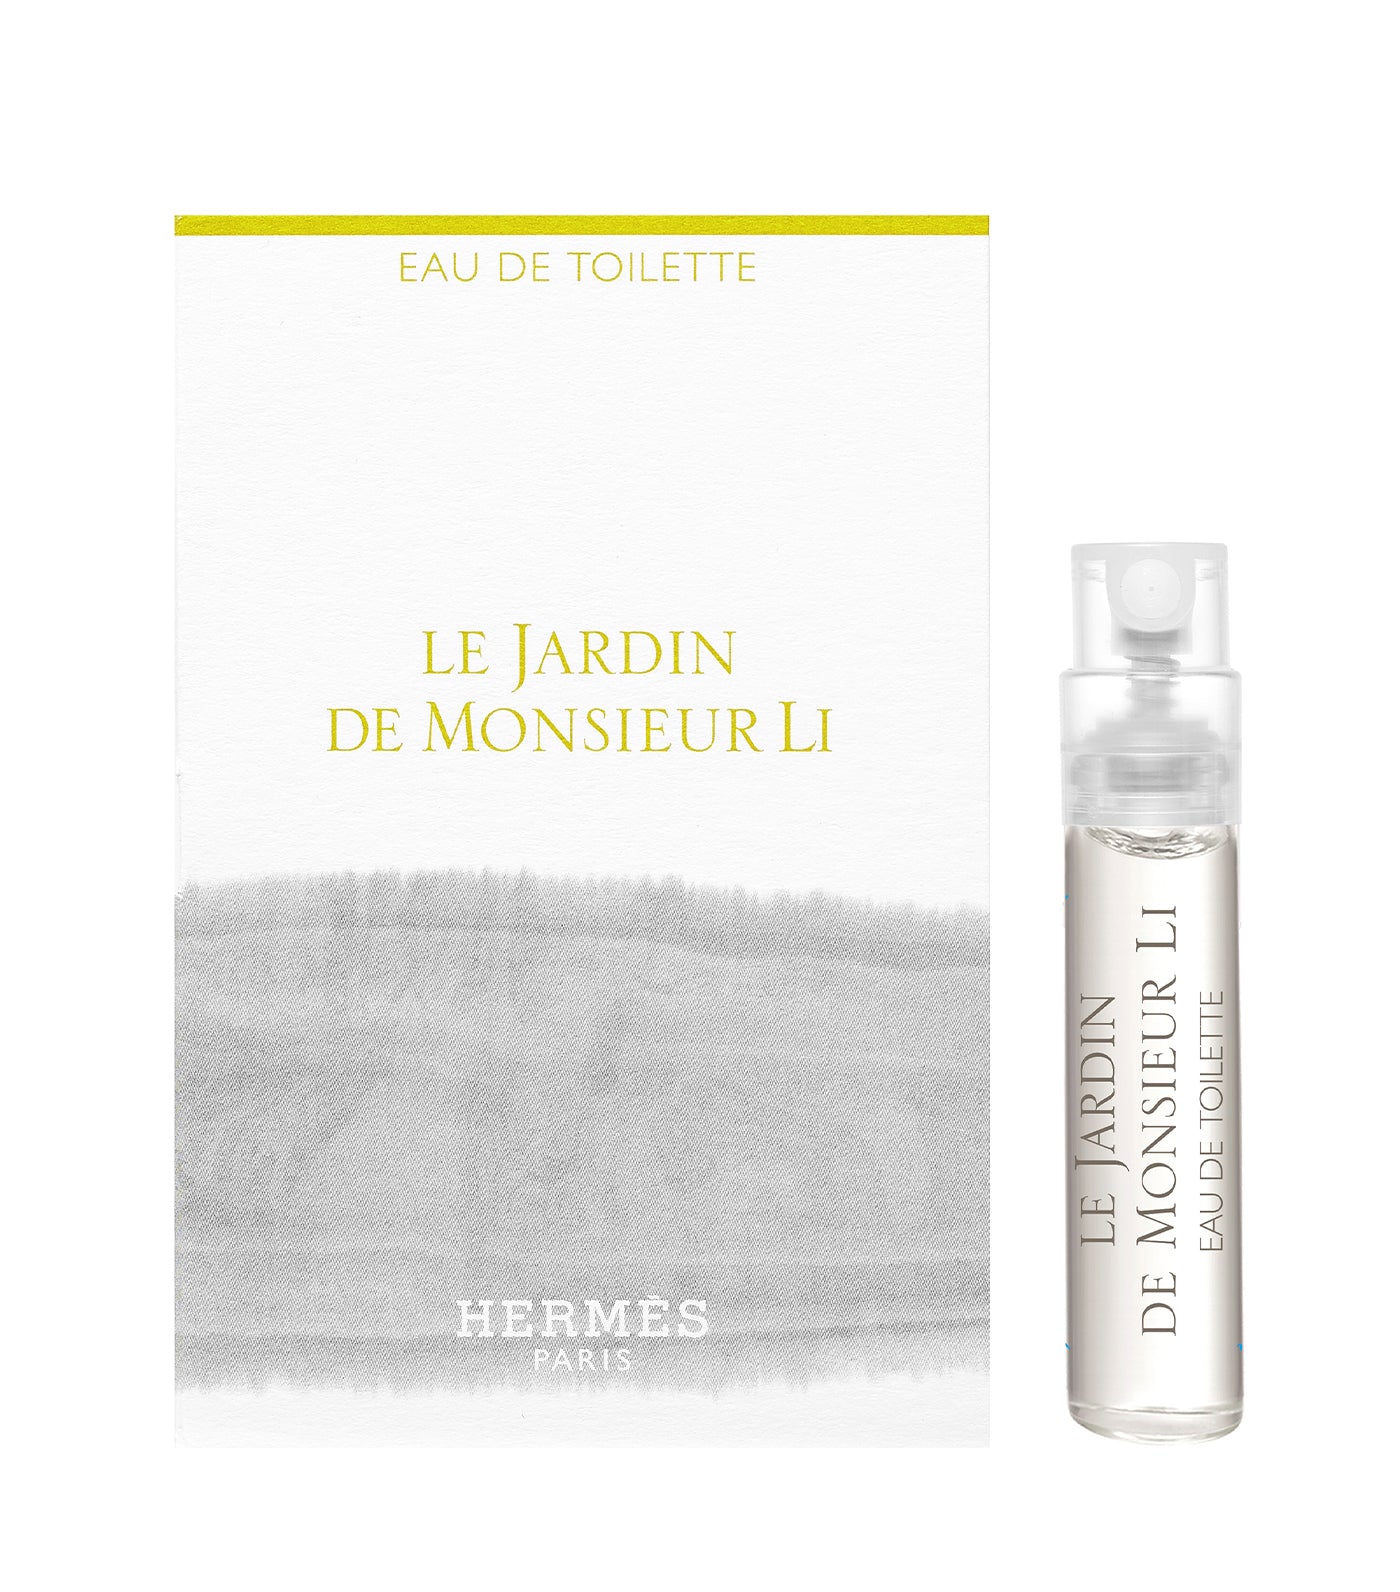 Free sample of Hermès Gardens-Perfume fragrance